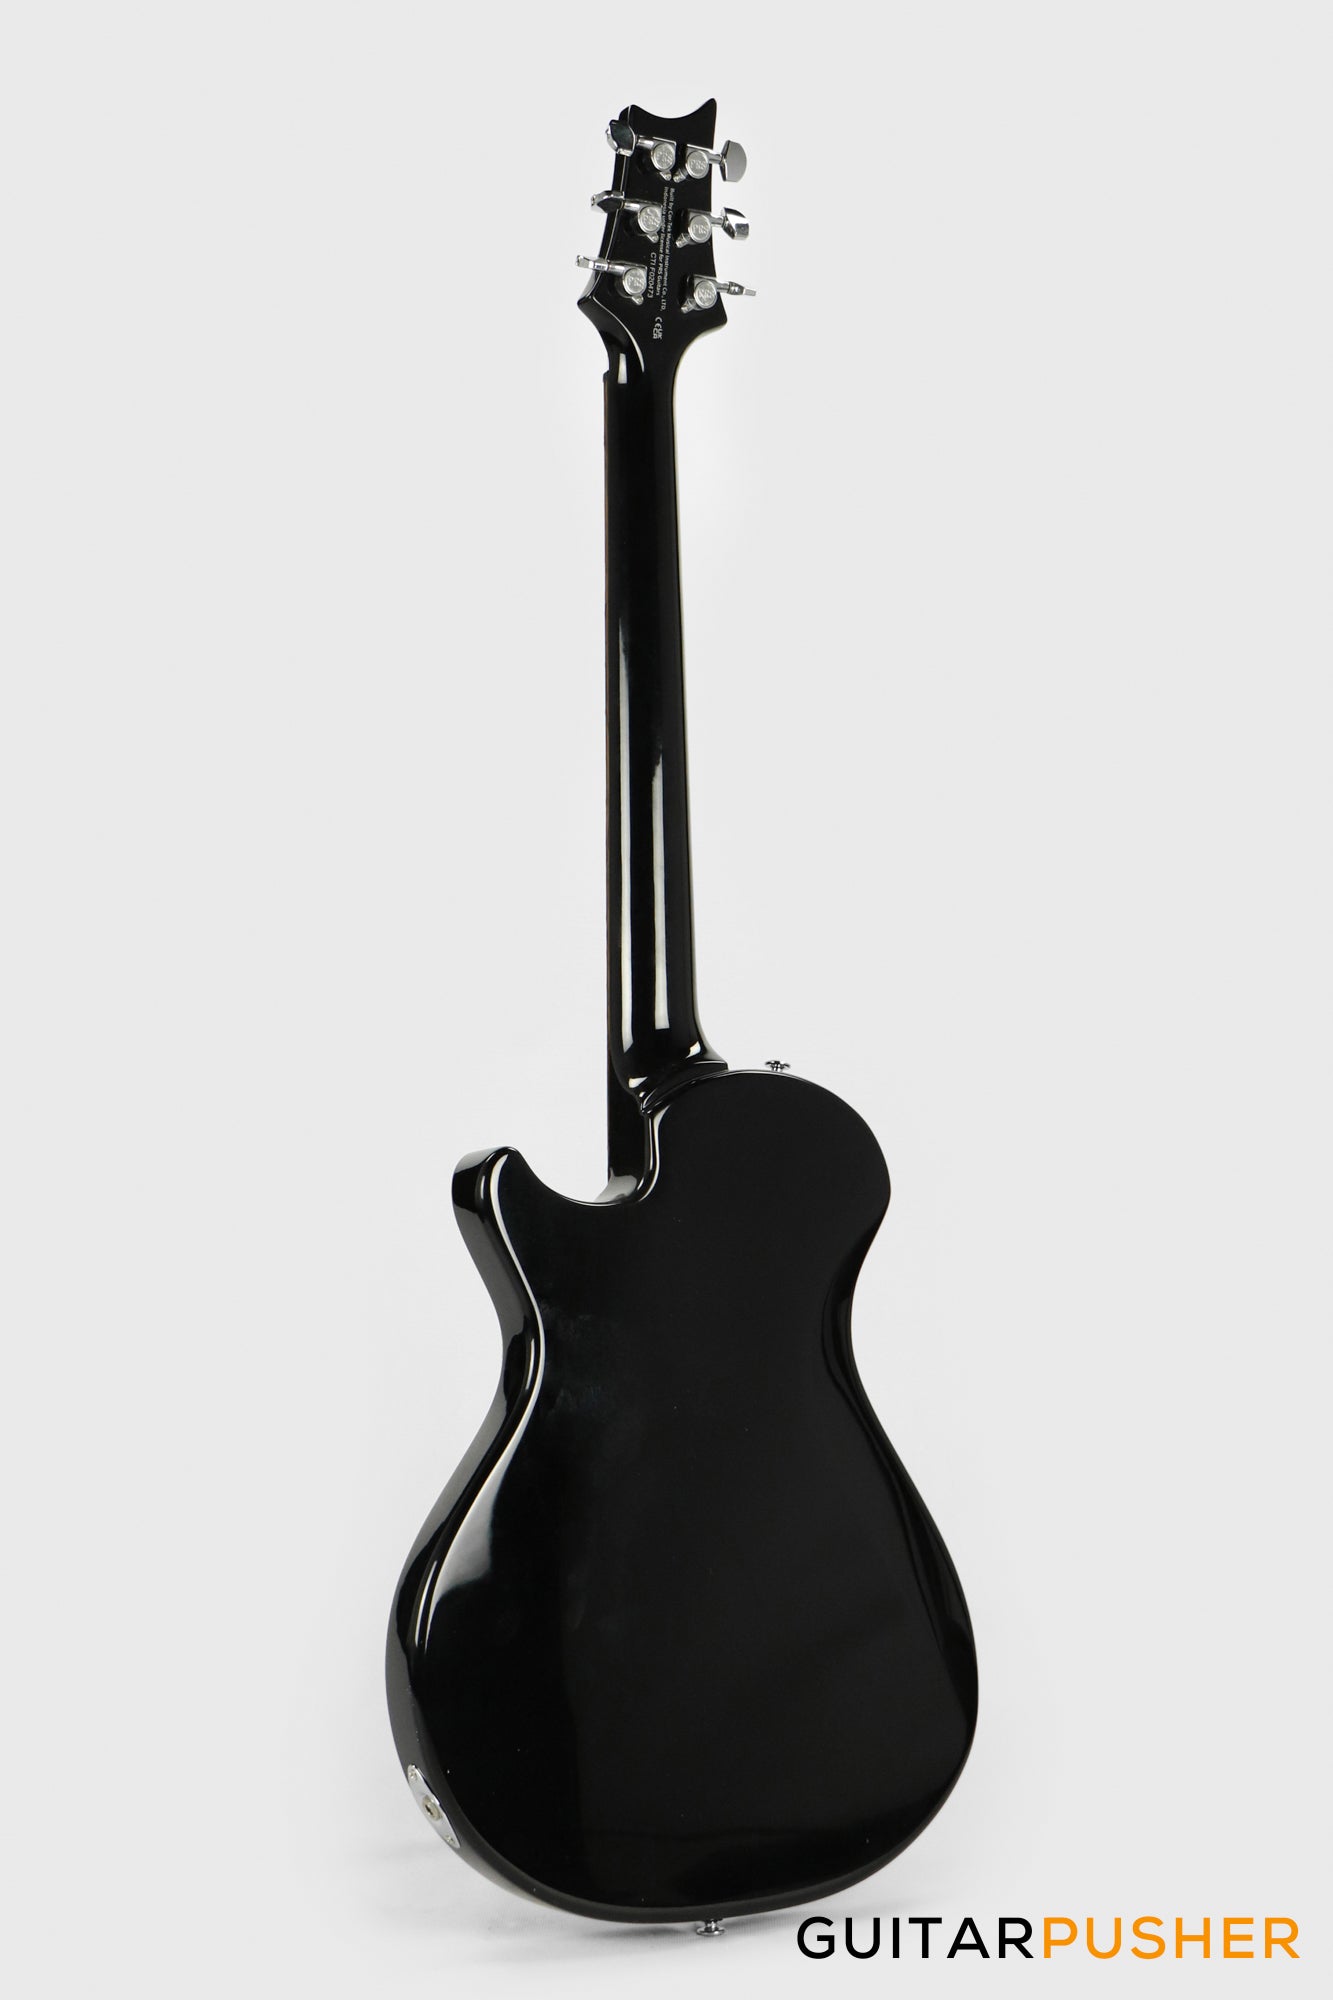 PRS Guitars SE Starla Stoptail Electric Guitar (Black)